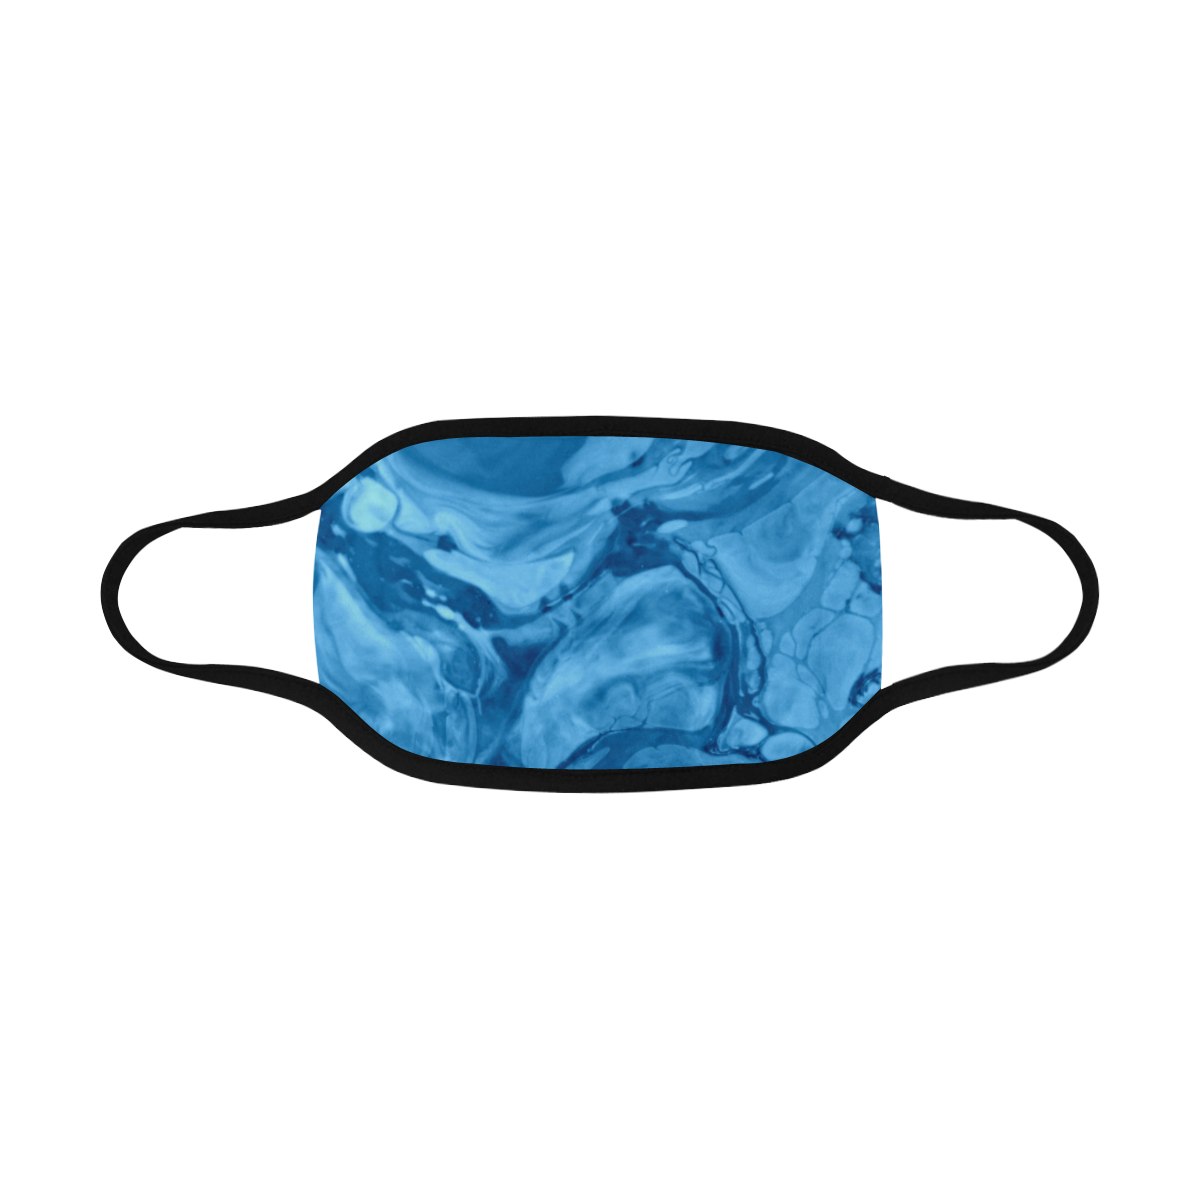 Swirl Blue Face-Mask Mouth Mask